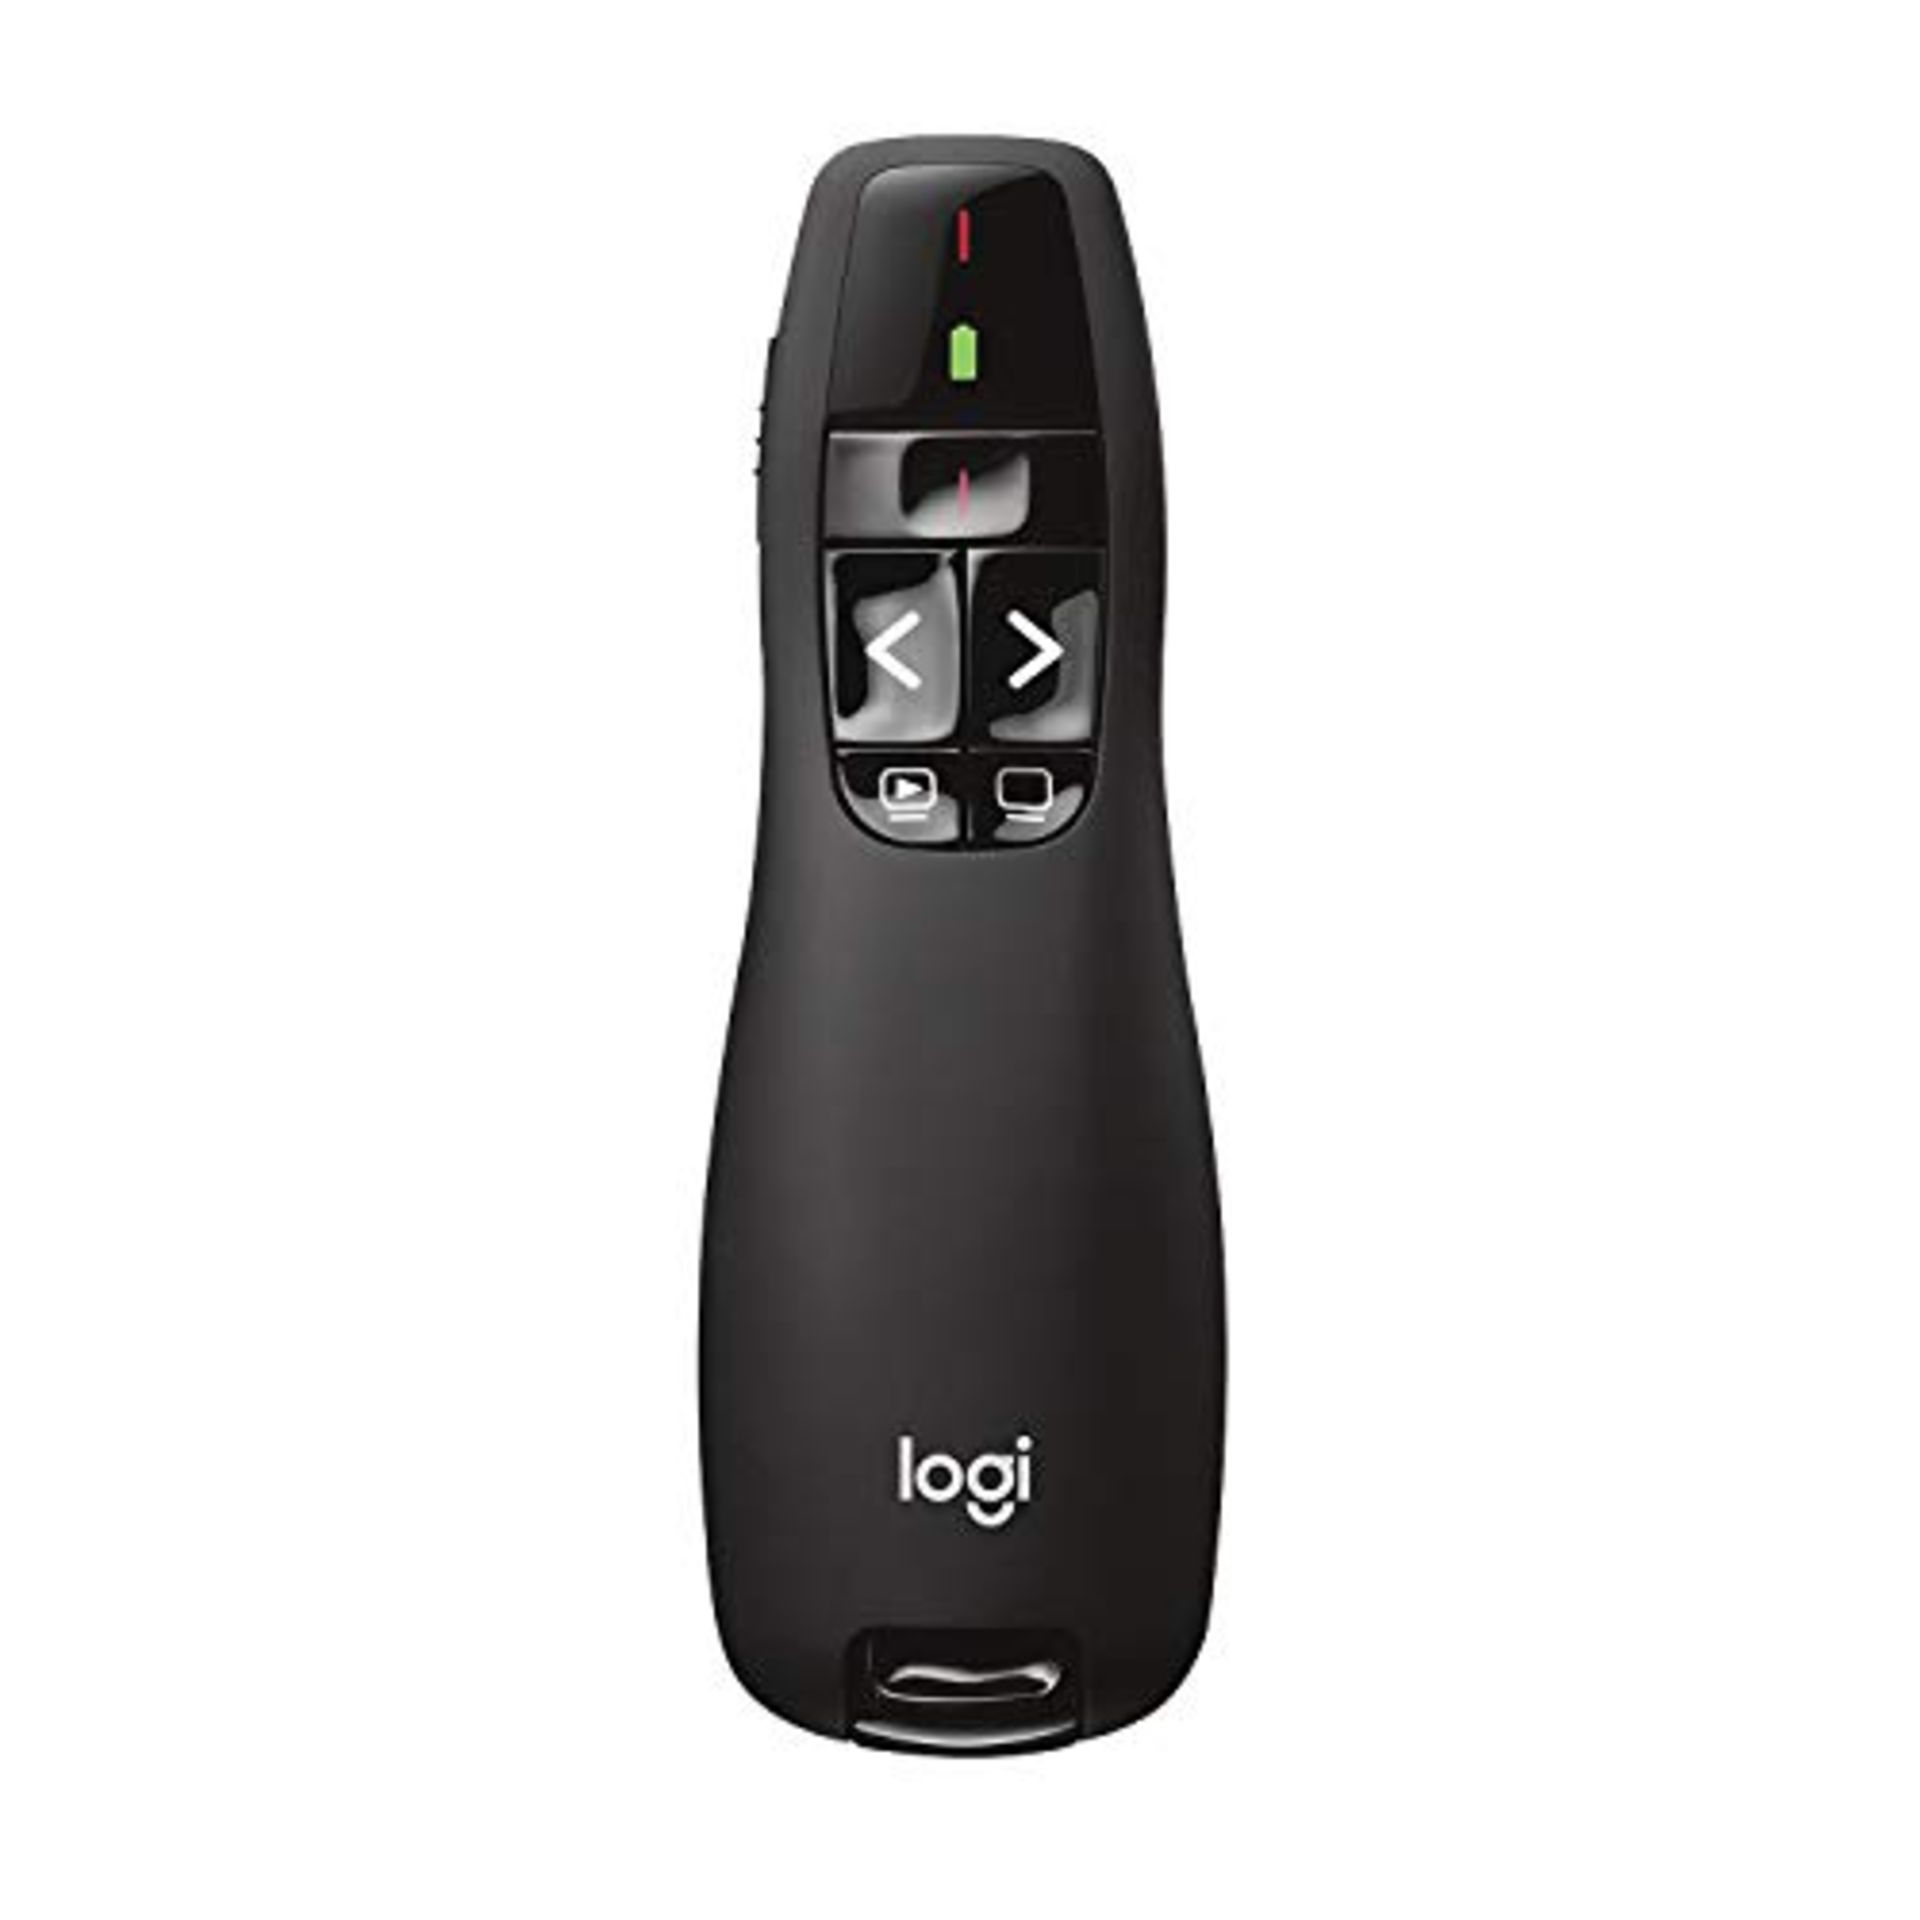 Logitech R400 Wireless Presentation Remote, 2.4 GHz/USB Receiver, Red Laser Pointer, 1 - Image 3 of 4